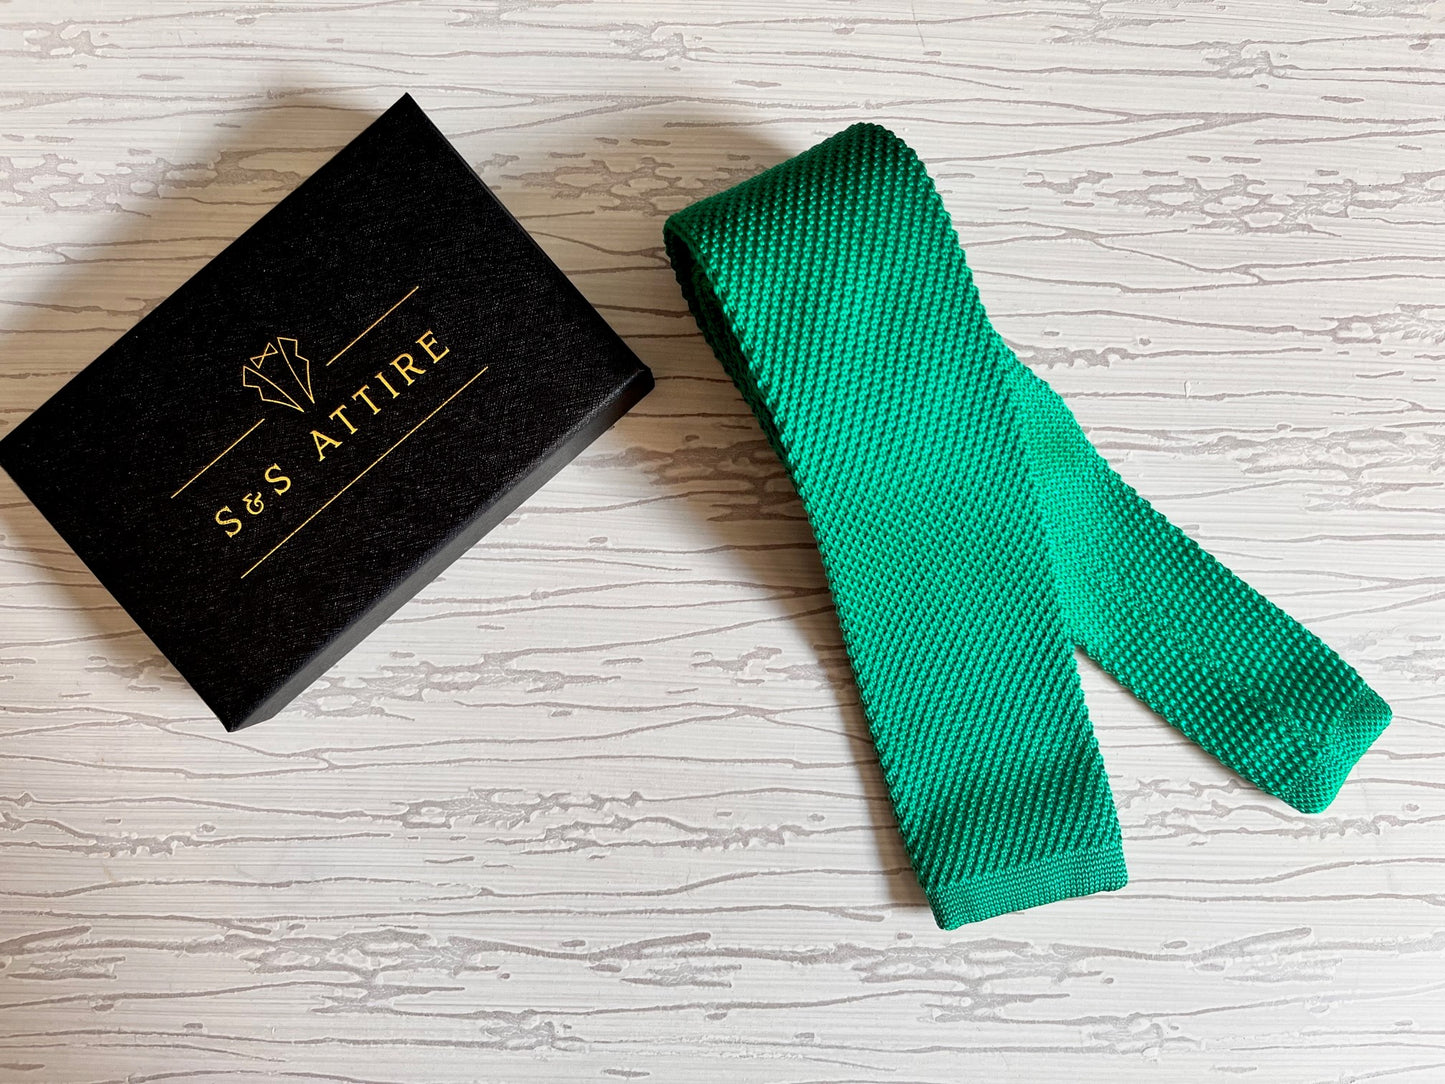 S&S Attire Knitted Tie Light Green